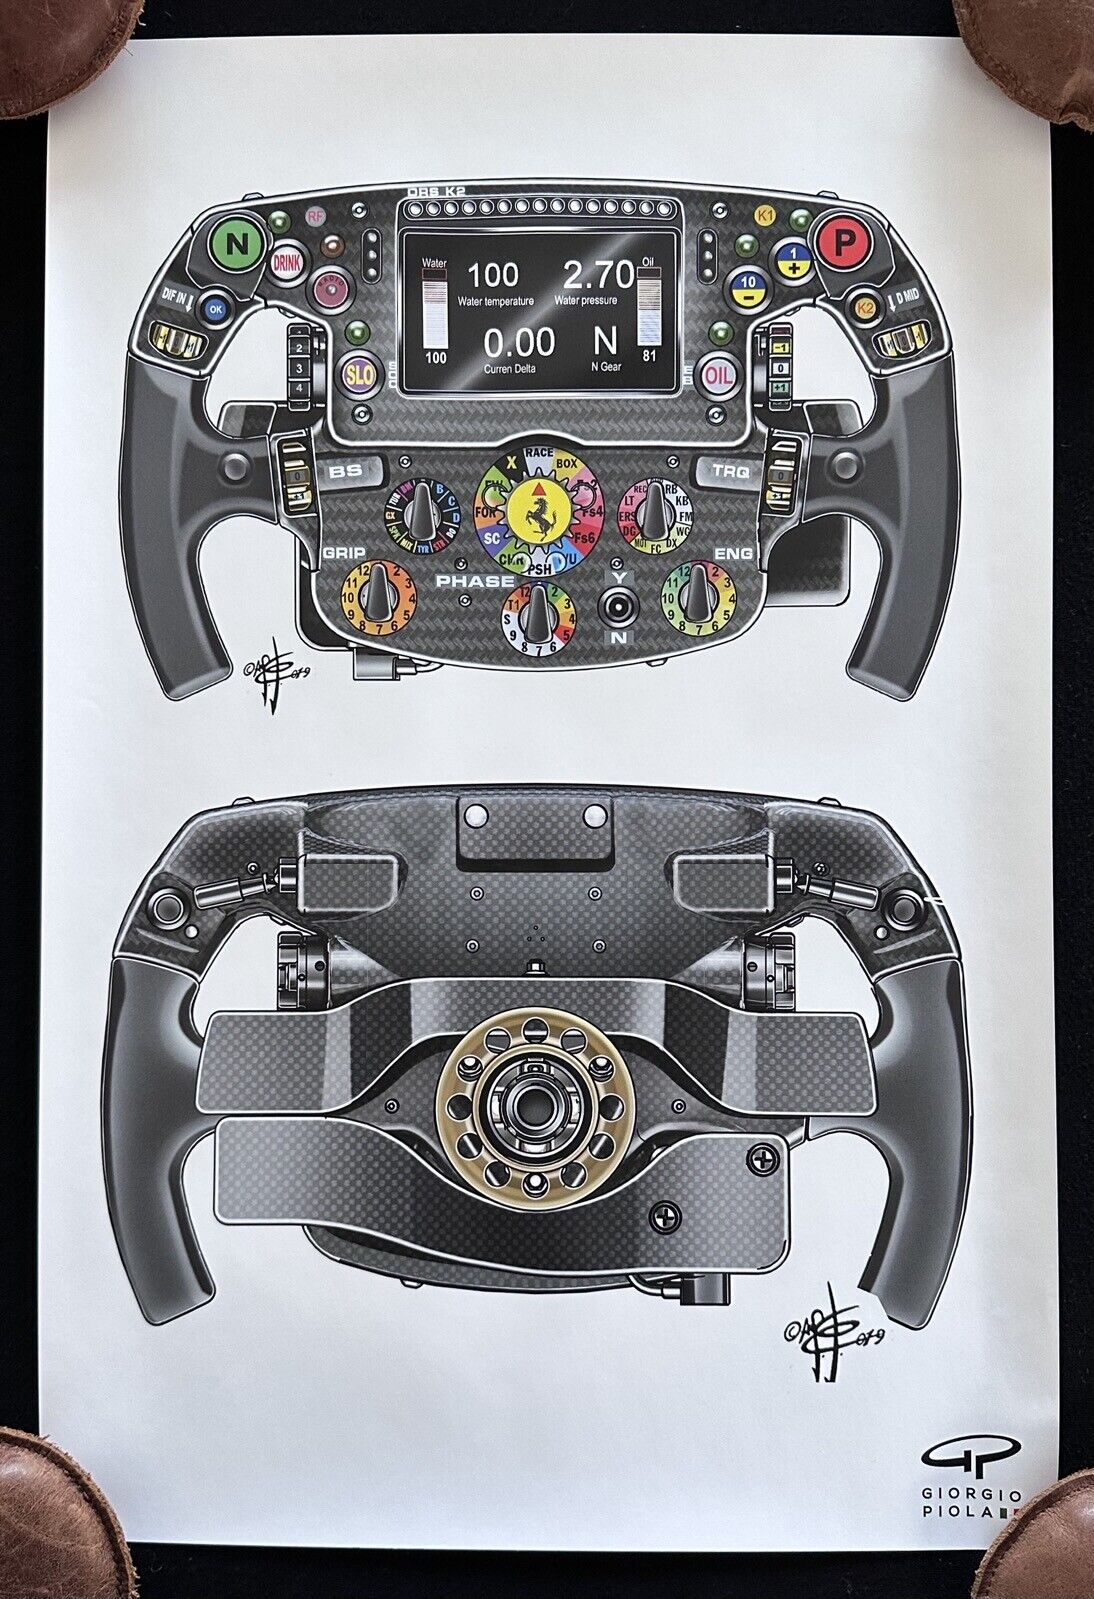 Giorgio Piola 2019 Ferrari SF90 Steering Wheel Print Project 670 Vettel Leclerc